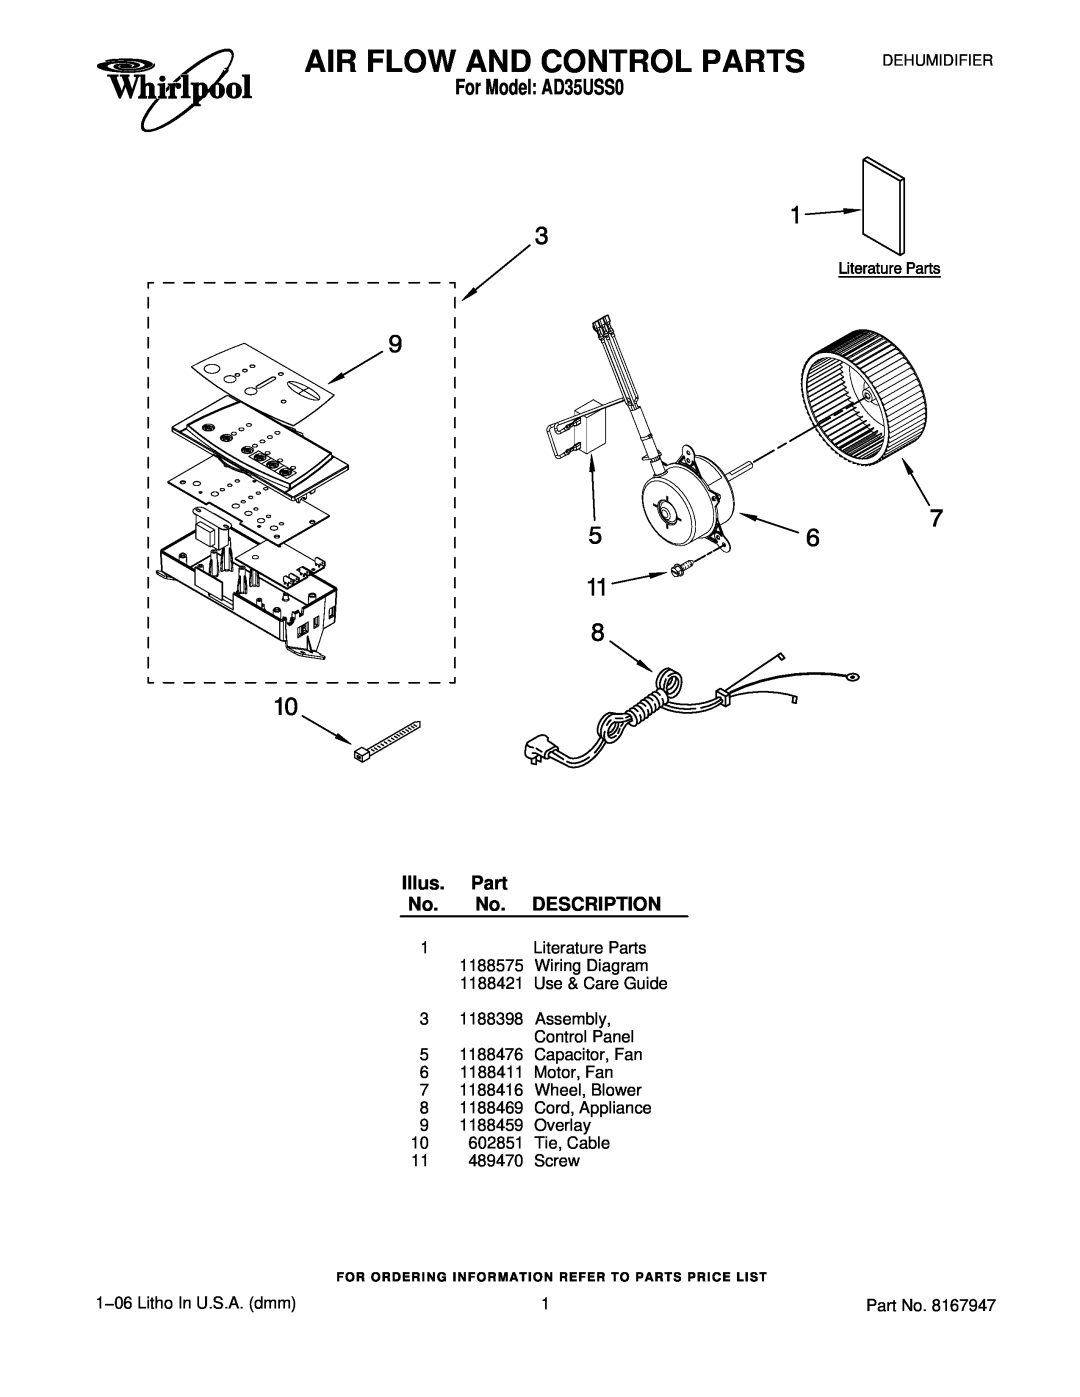 Whirlpool manual For Model AD35USS0, Illus. Part No. No. DESCRIPTION, Air Flow And Control Parts, Dehumidifier 